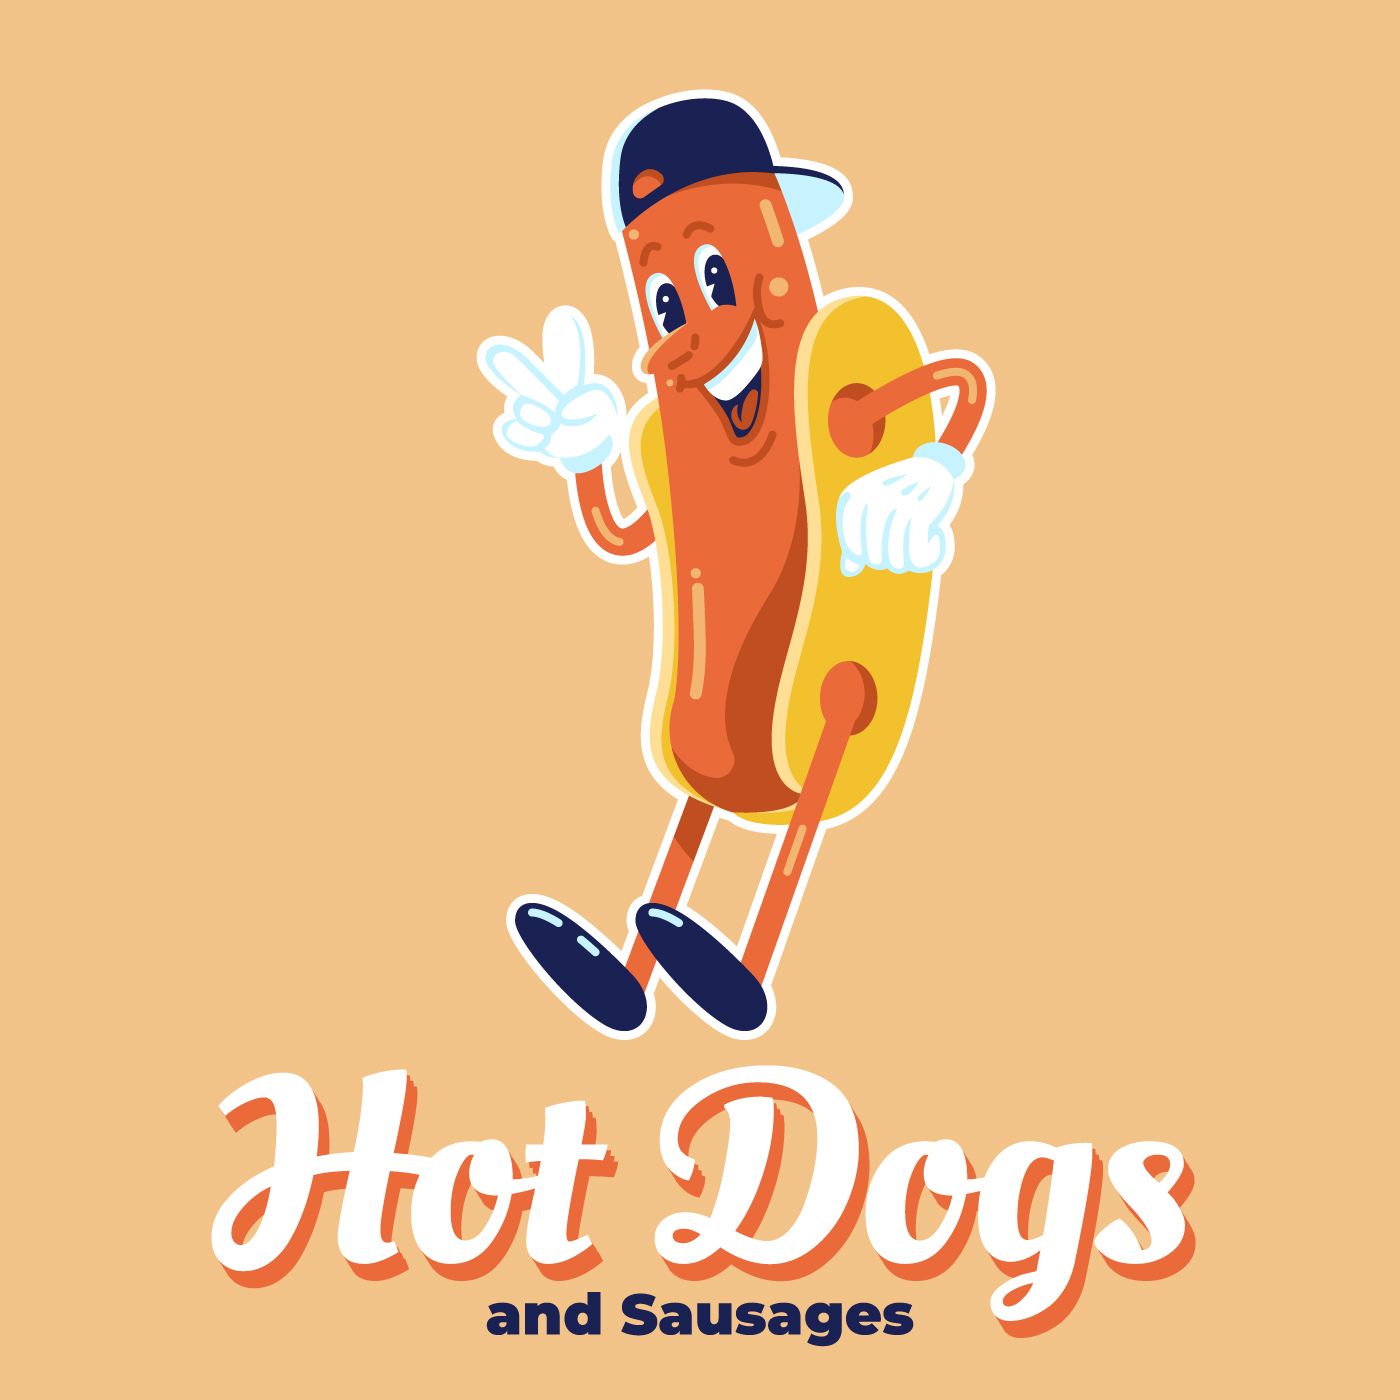 hot dog logo ideas 5